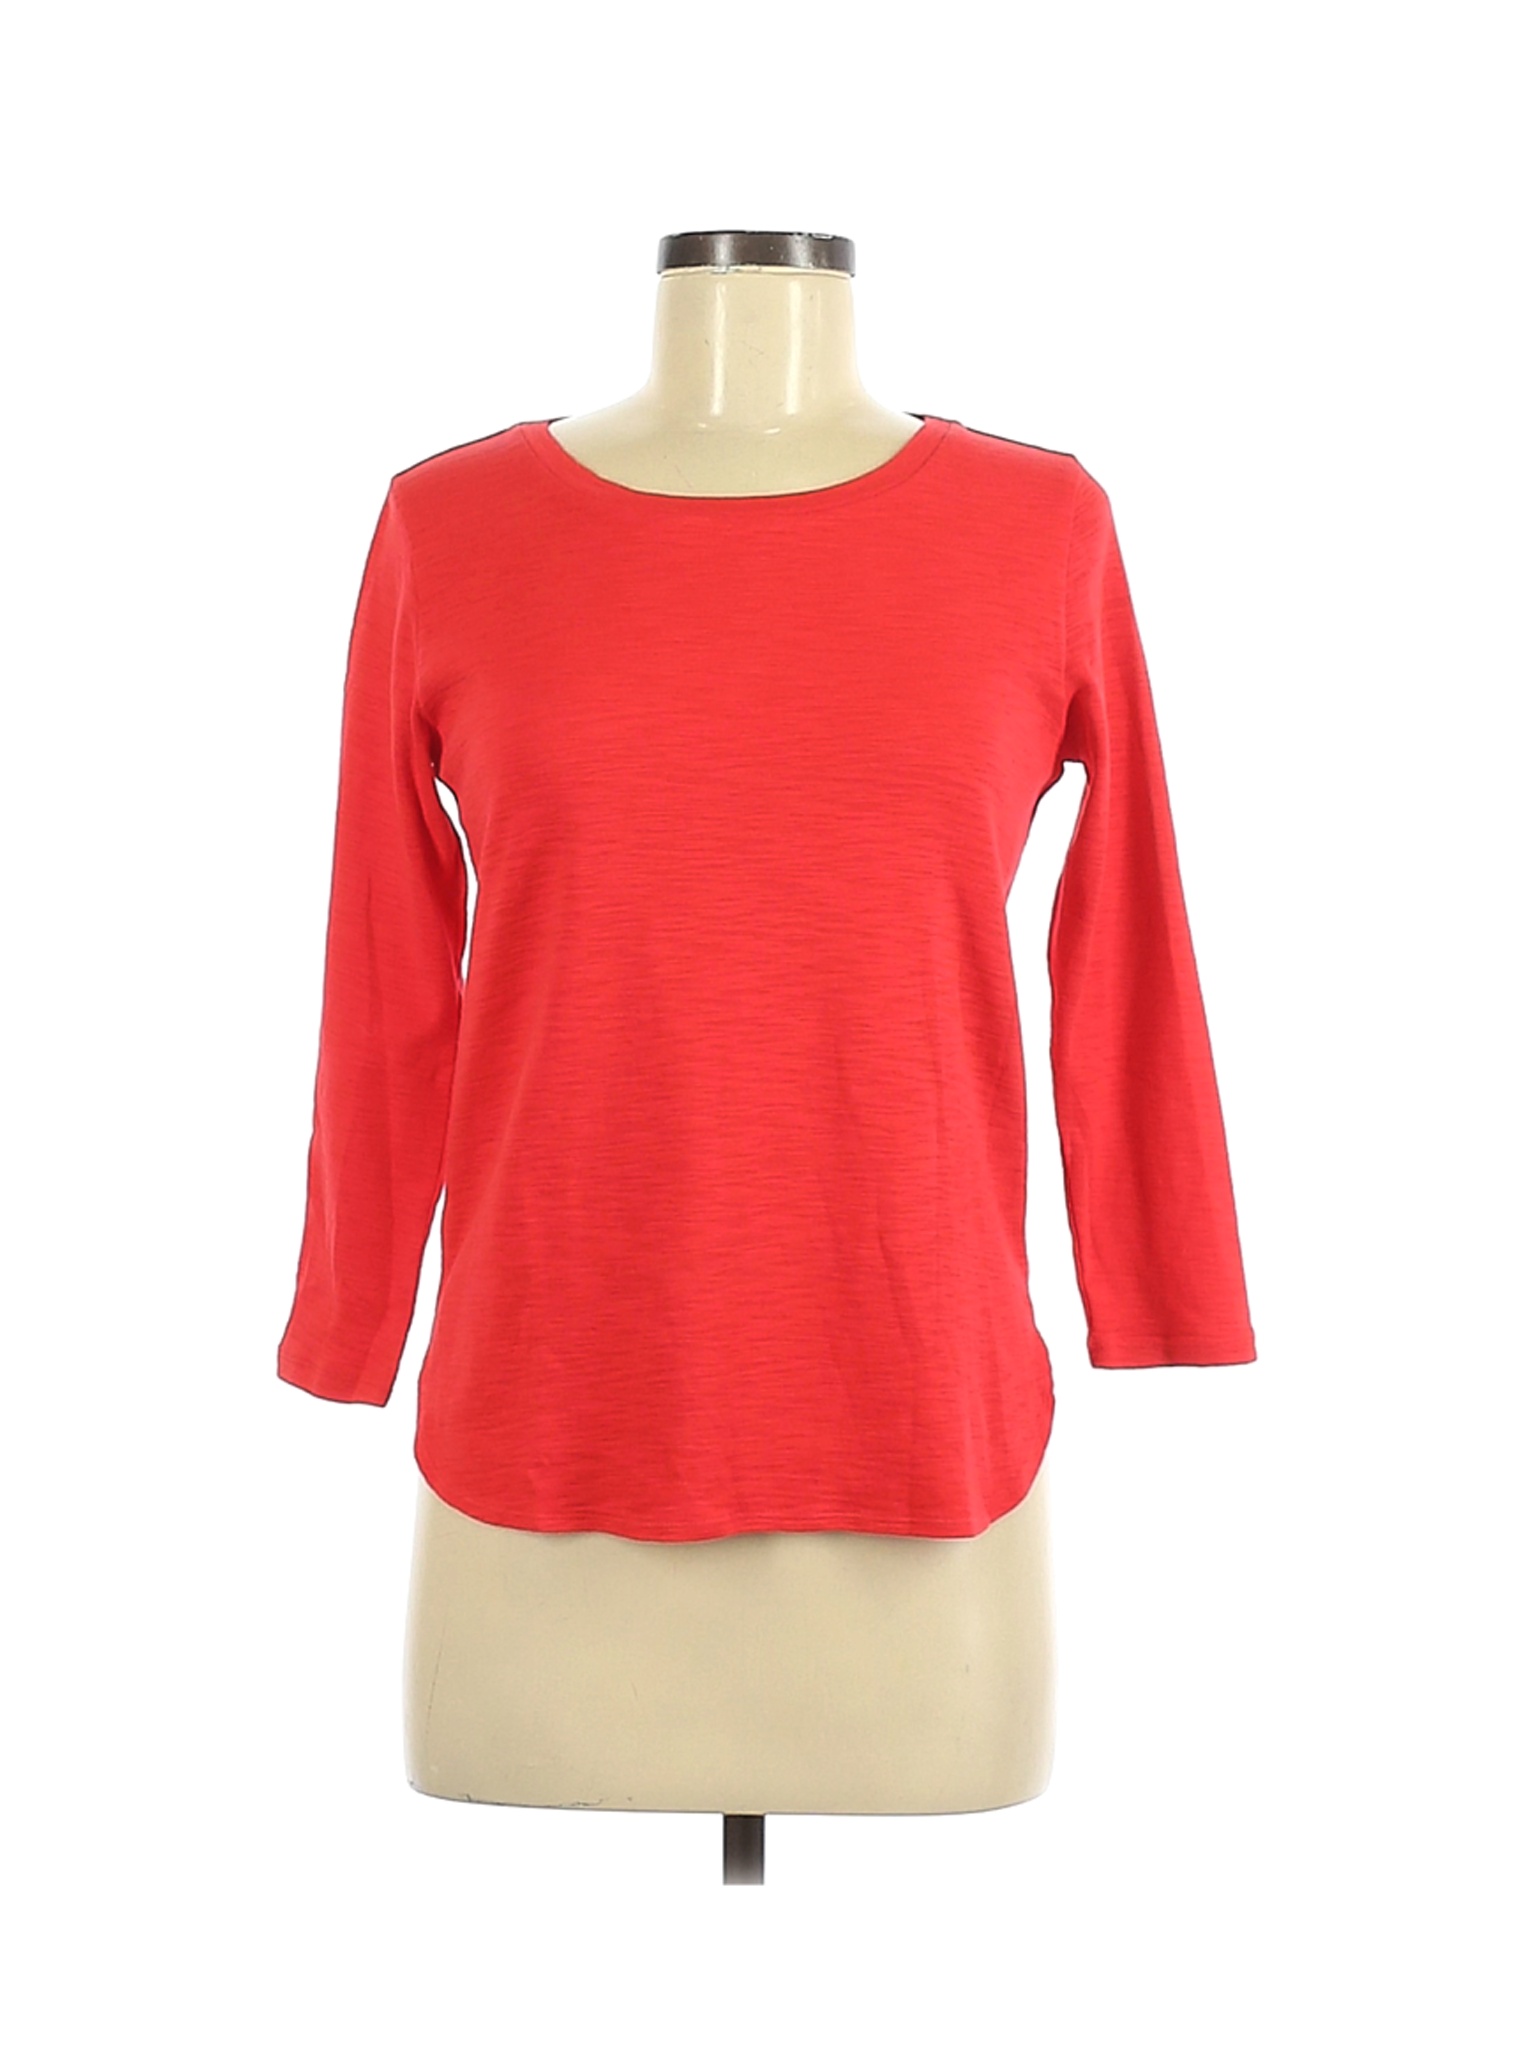 NWT Tommy Bahama Women Red Long Sleeve T-Shirt XS | eBay